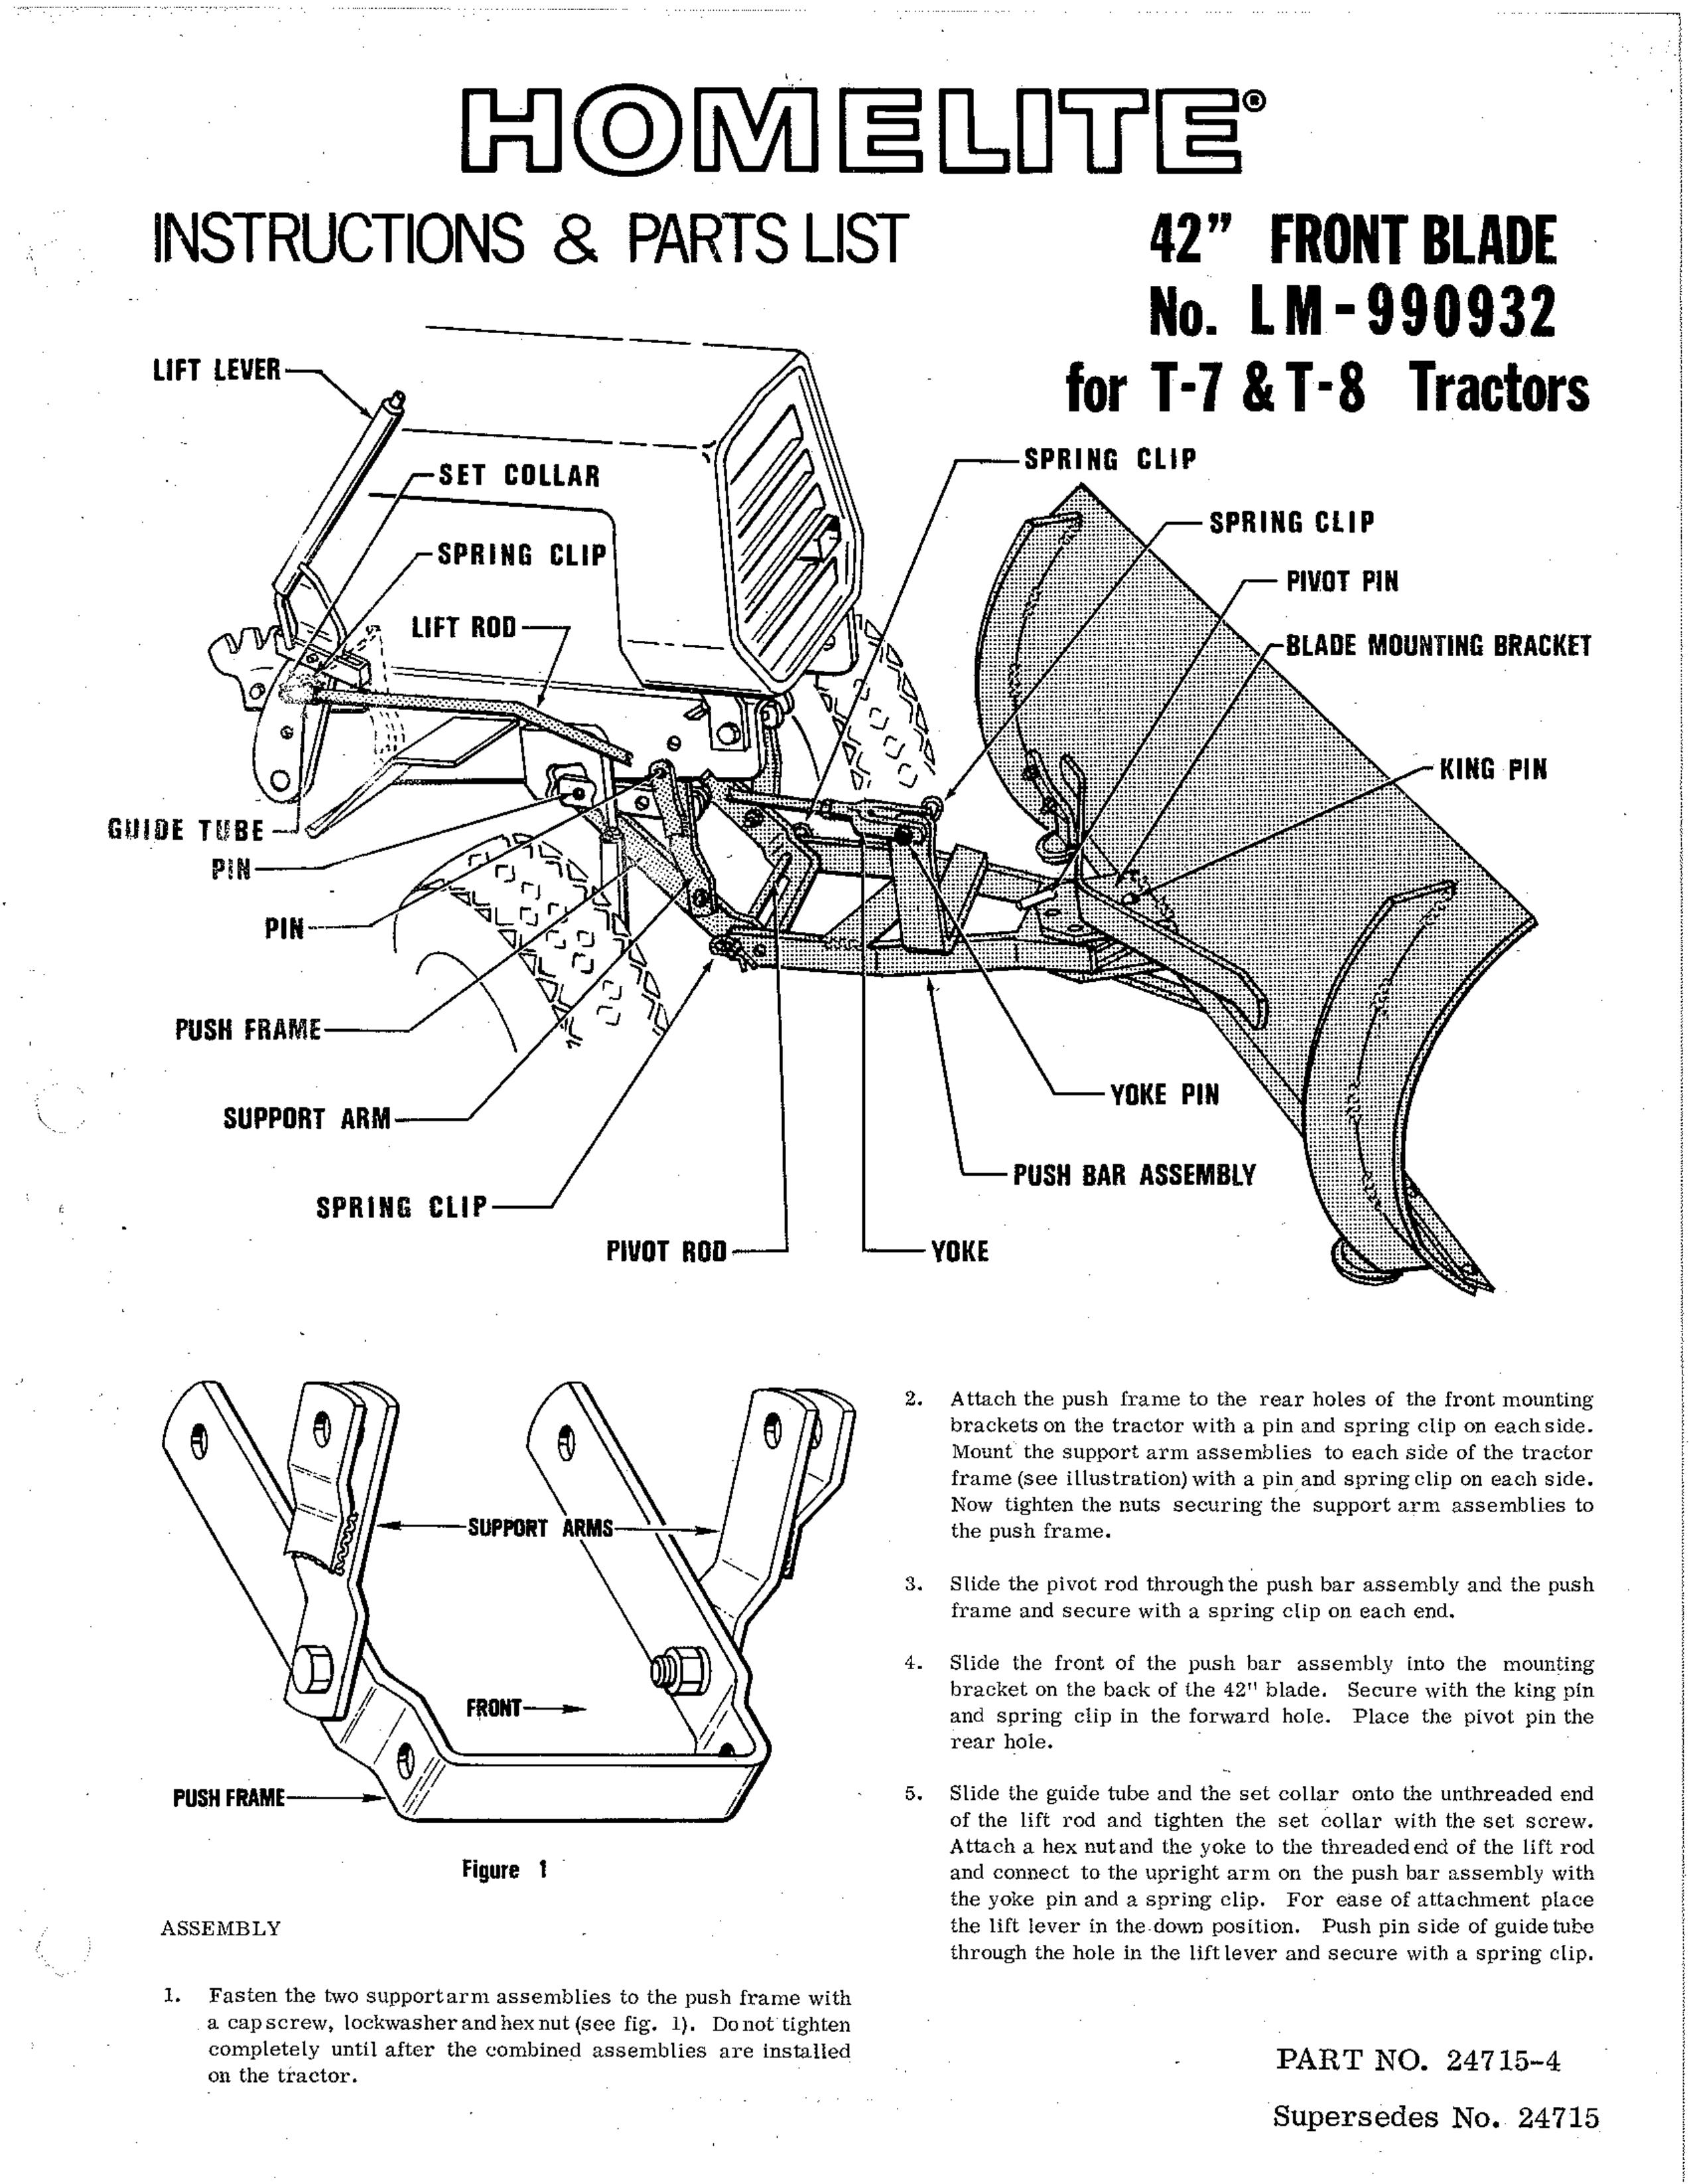 Homelite LM-990932 Lawn Mower User Manual